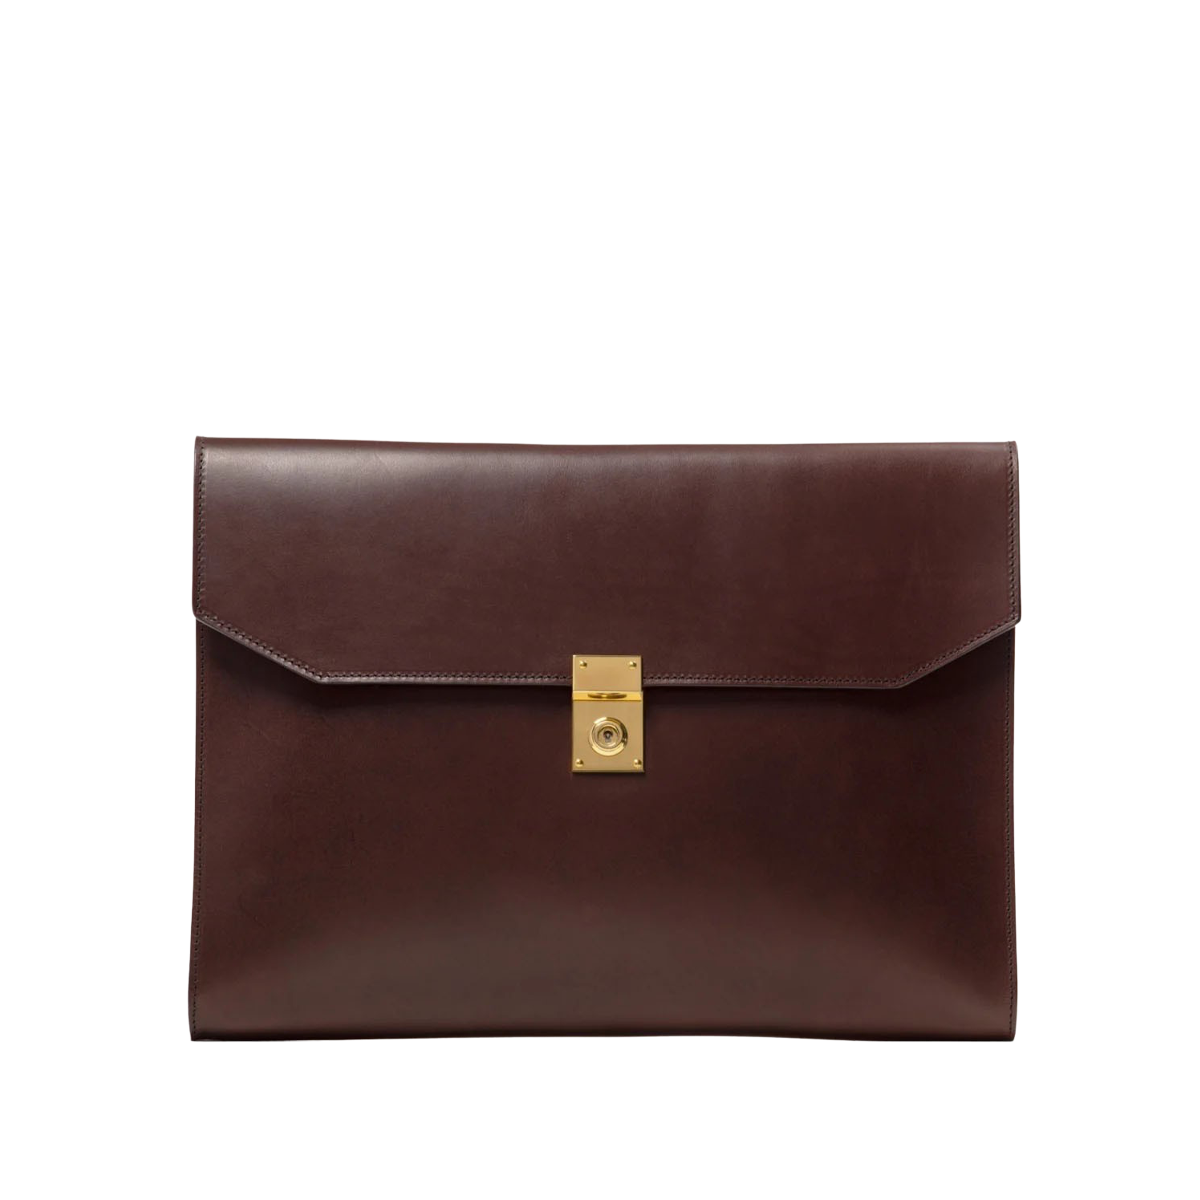 Frank Clegg Chocolate Belting Leather Wrap Portfolio Feature